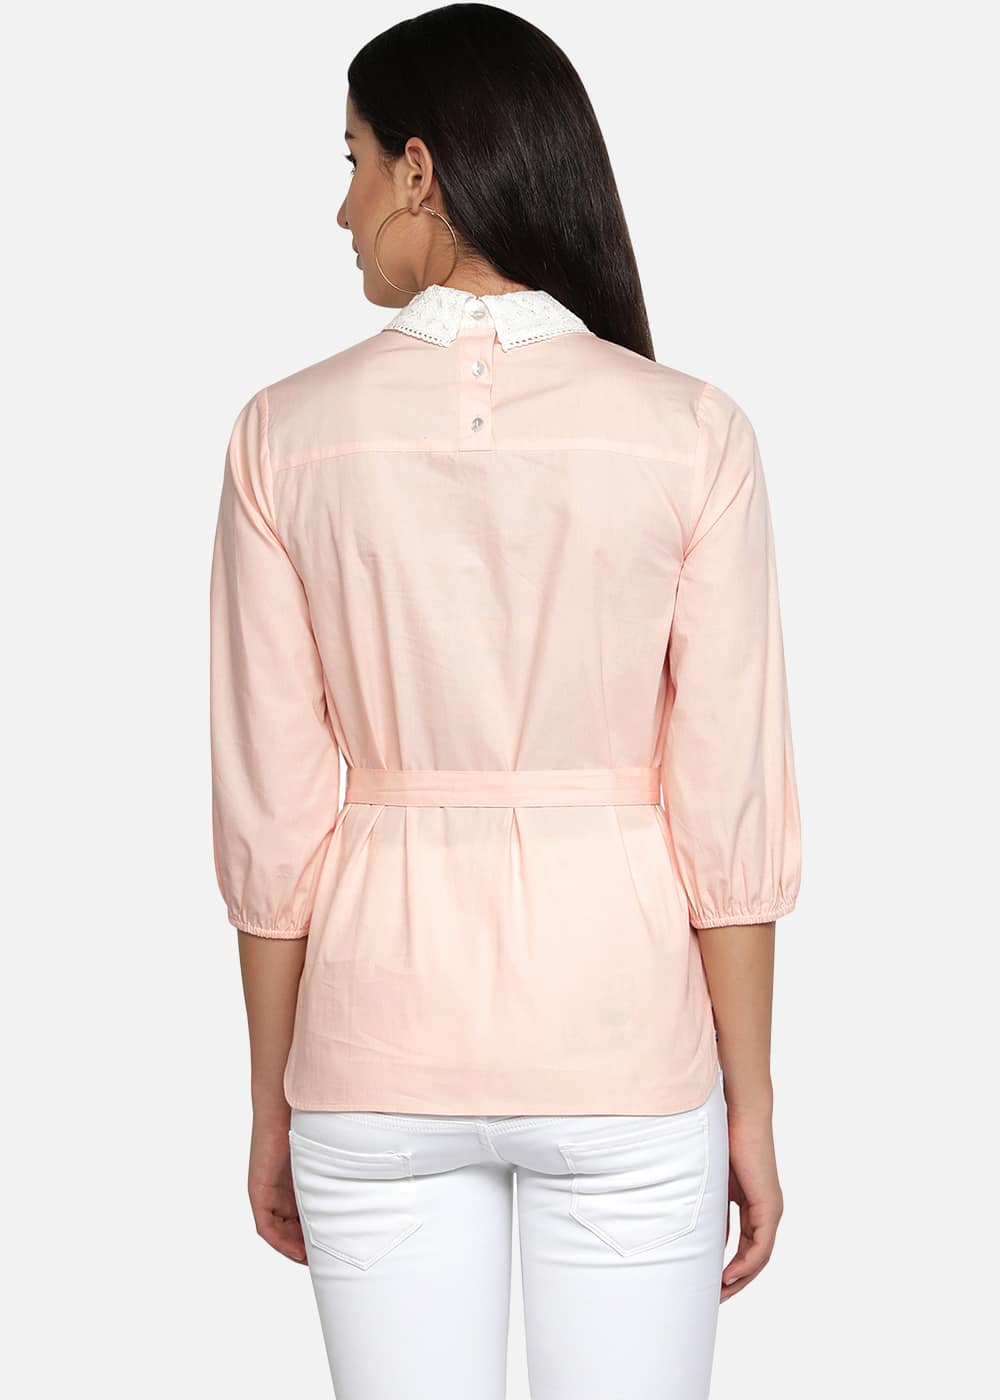 Blanc9 Pink Shirt With Laced Yoke